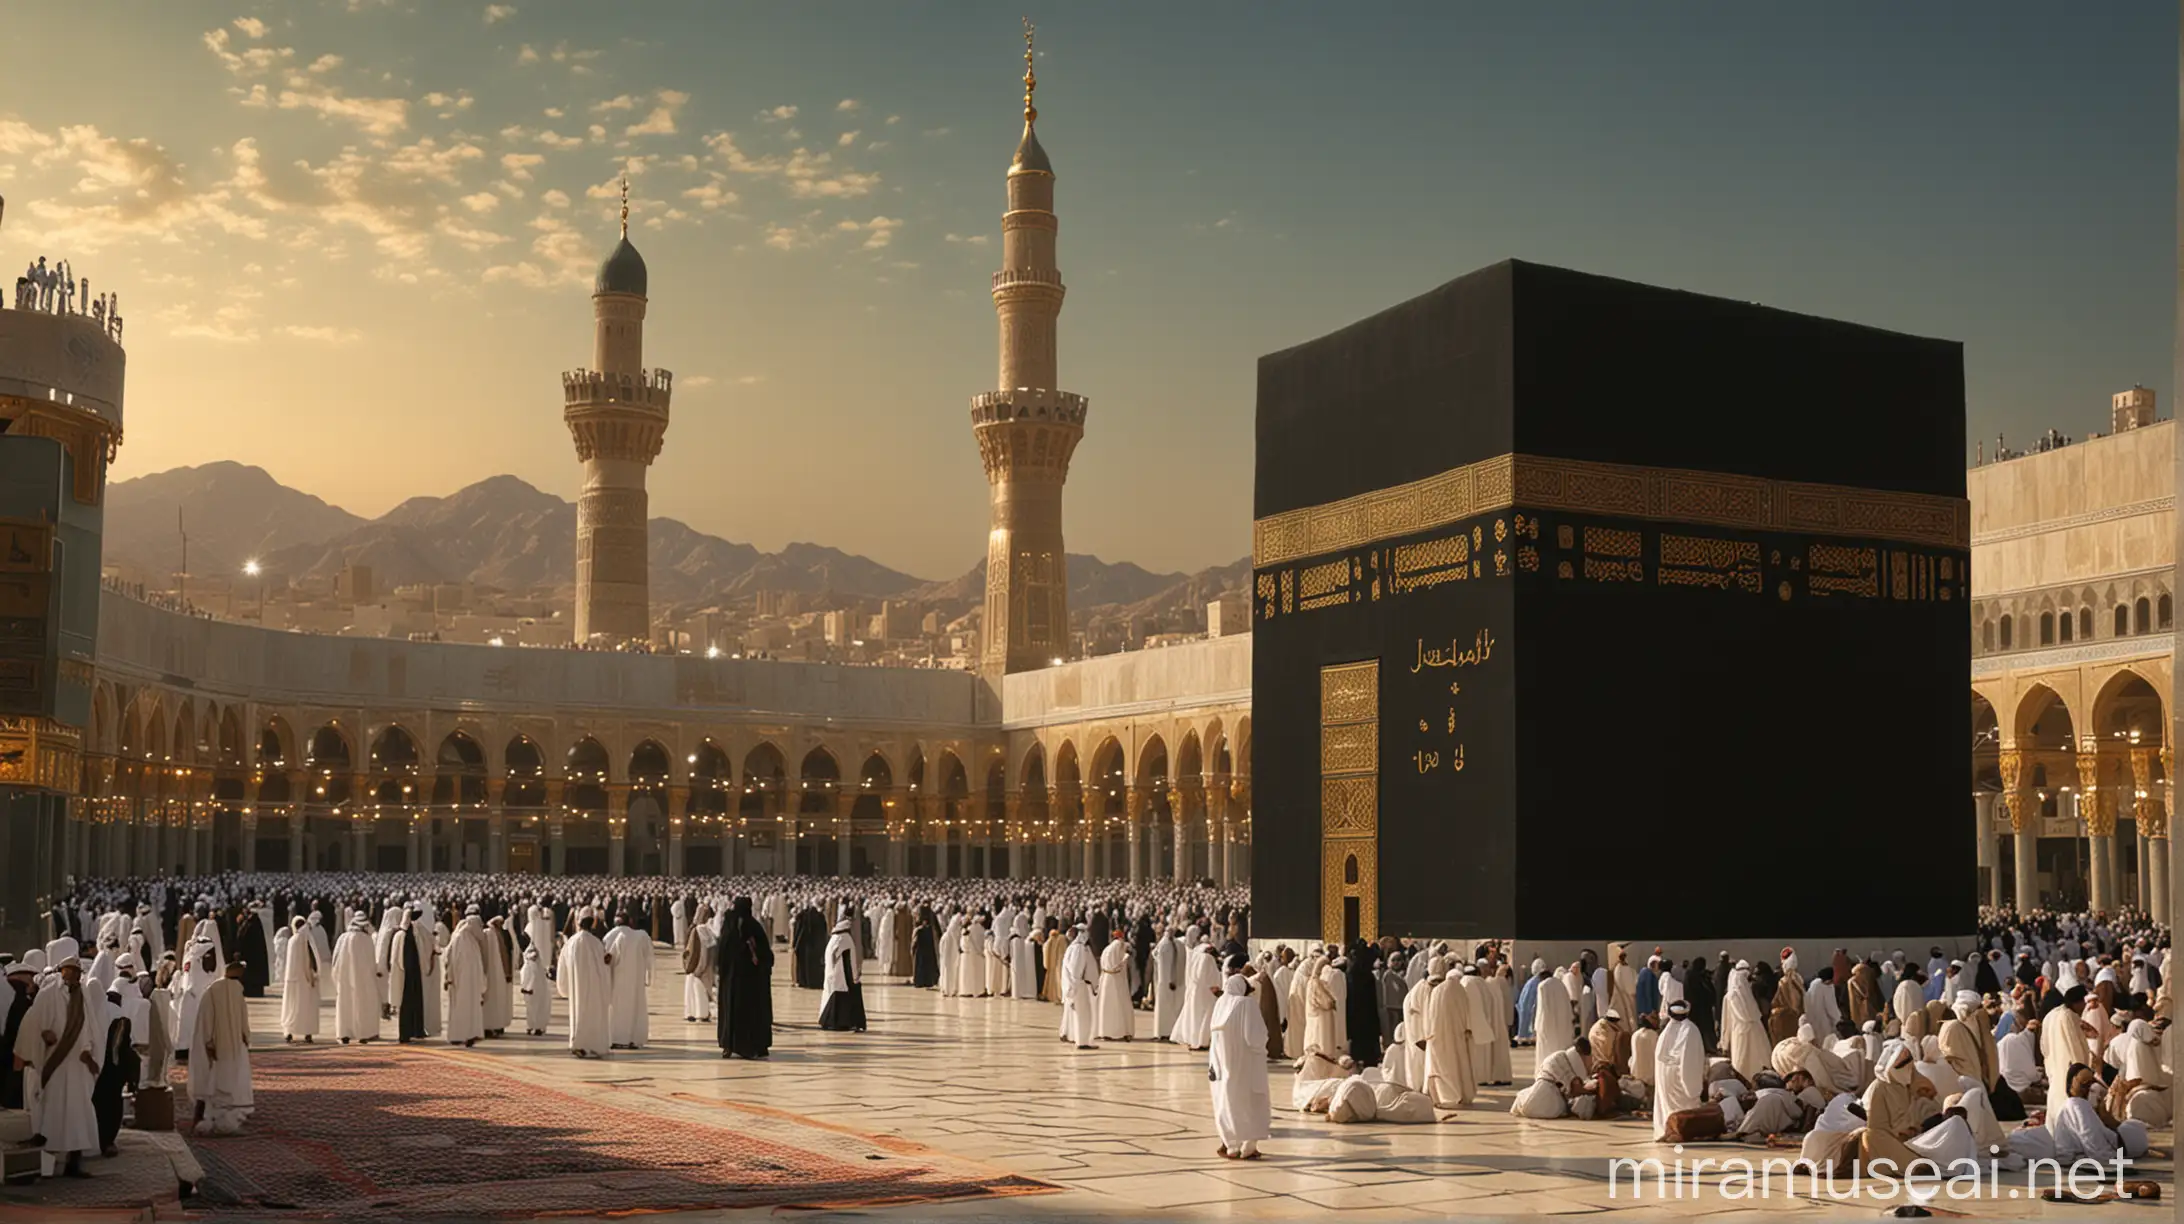 The Spiritual Journey of Hazrat Ali ibn Abi Talib (RA): From the Holy Kaaba to Leadership in Islam